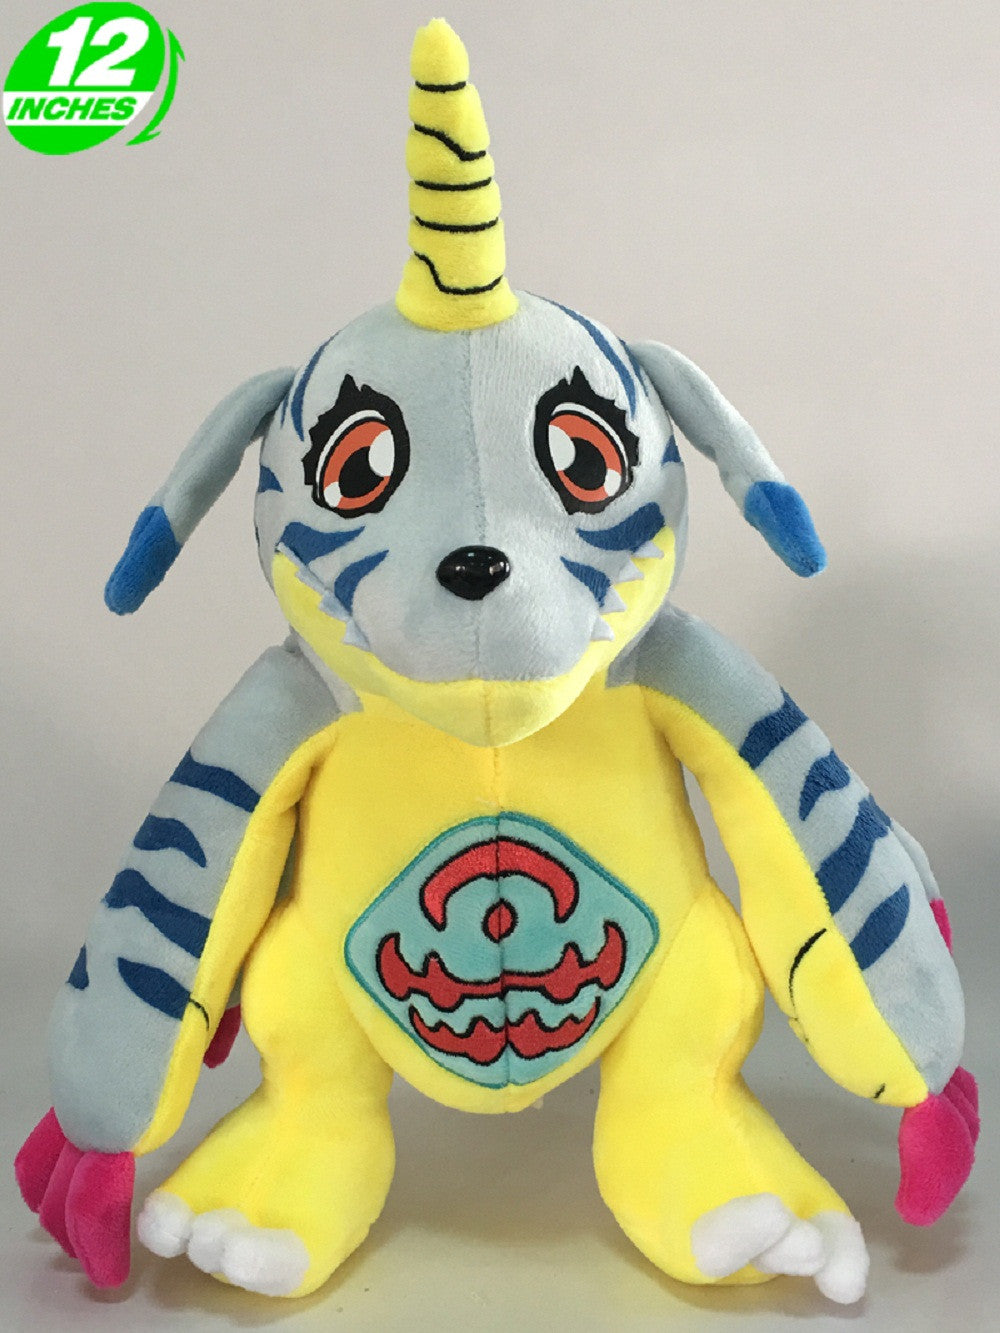 Digimon Adventure Gabumon Plush Doll - Super Anime Store FREE SHIPPING FAST SHIPPING USA